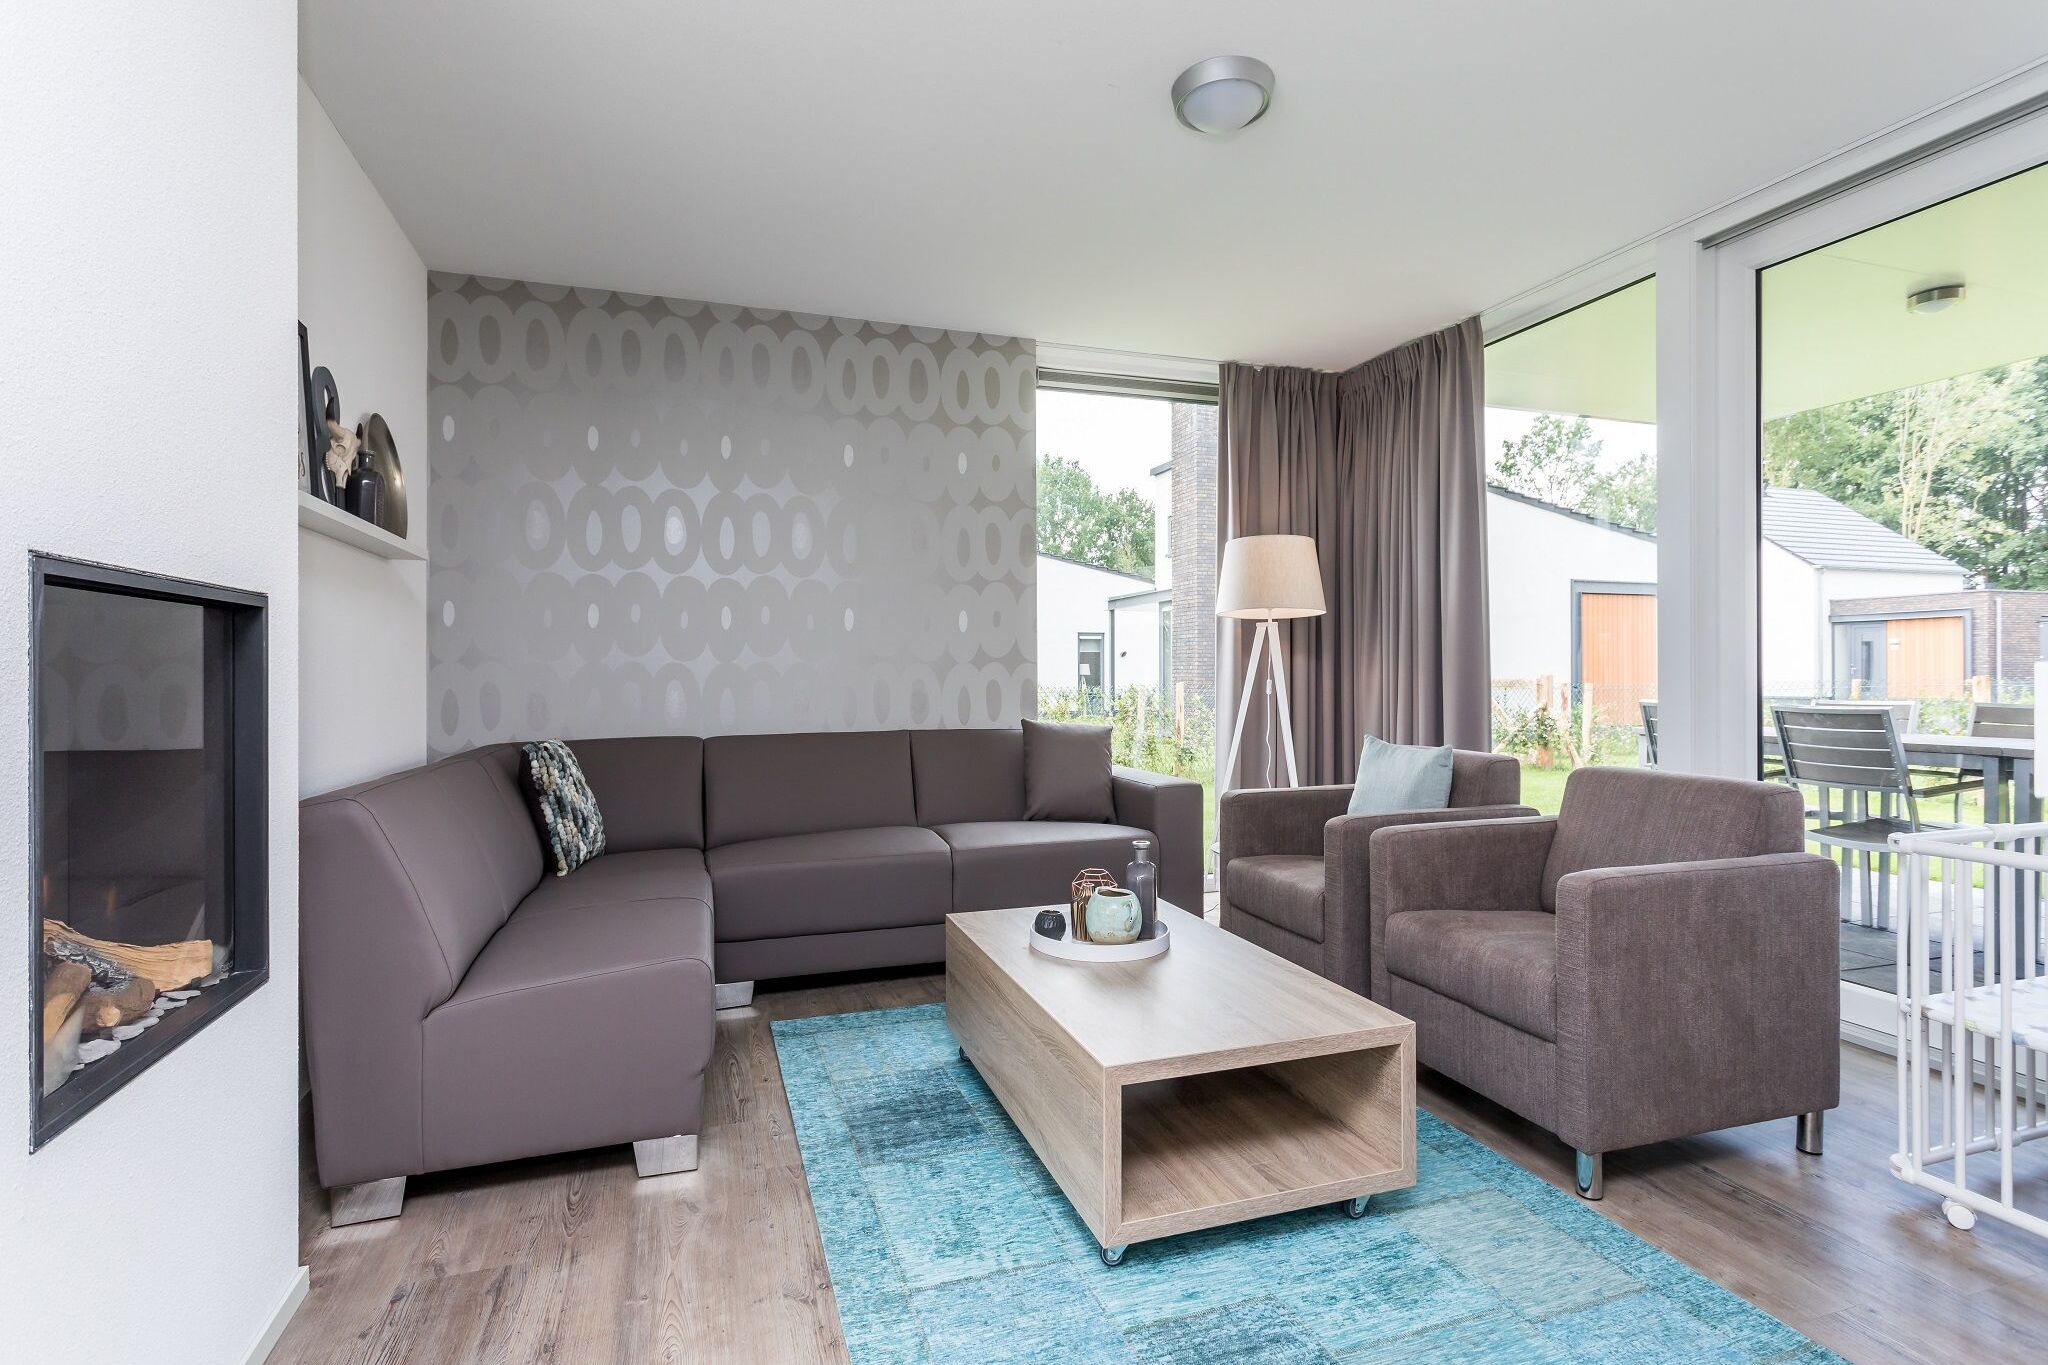 Moderne en kindvriendelijke villa in Limburg